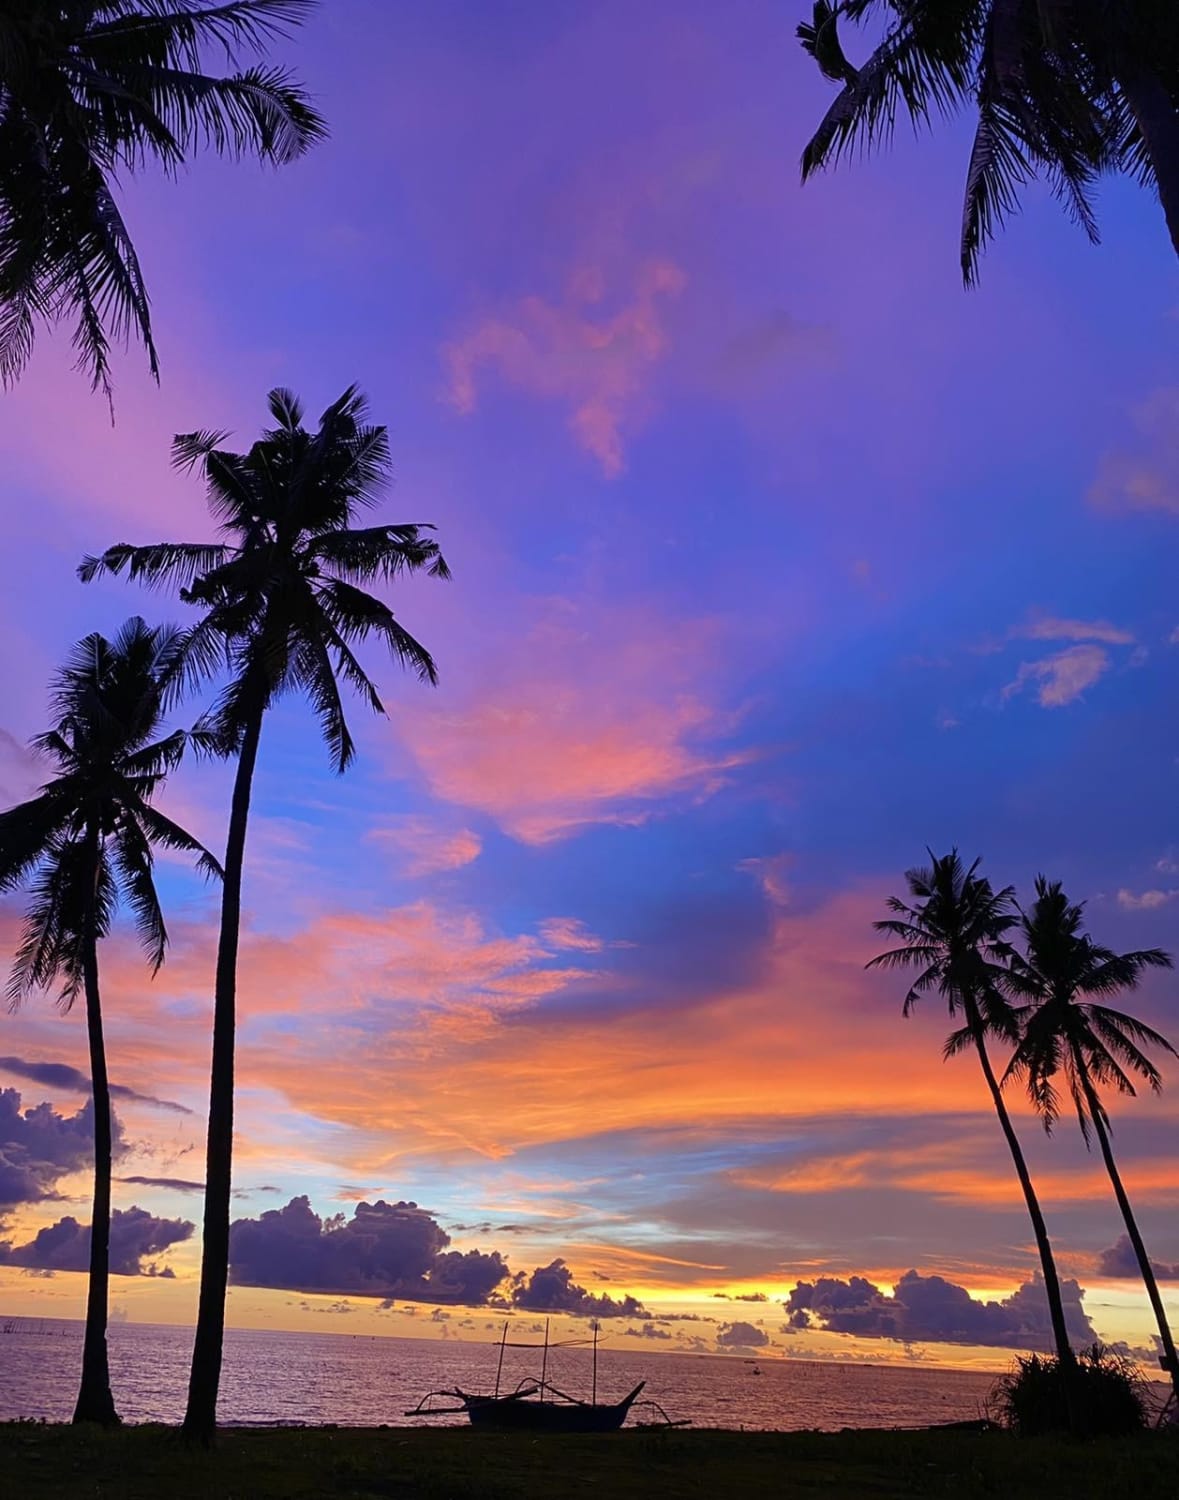 Philippine sunsets are beautiful.